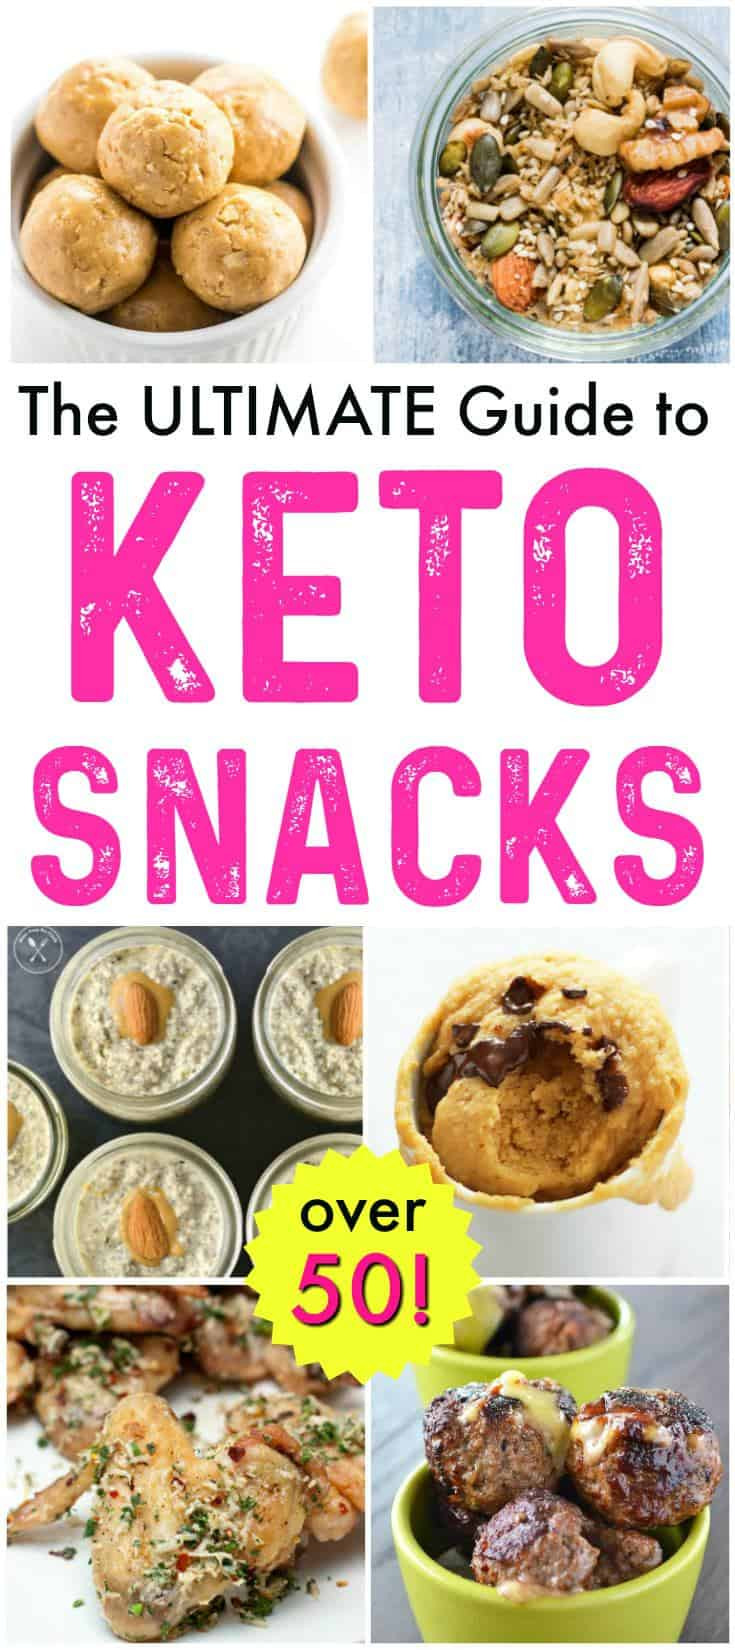 Keto Diet Snacks Videos The plete Guide to Keto Snacks Over 50 Keto Diet